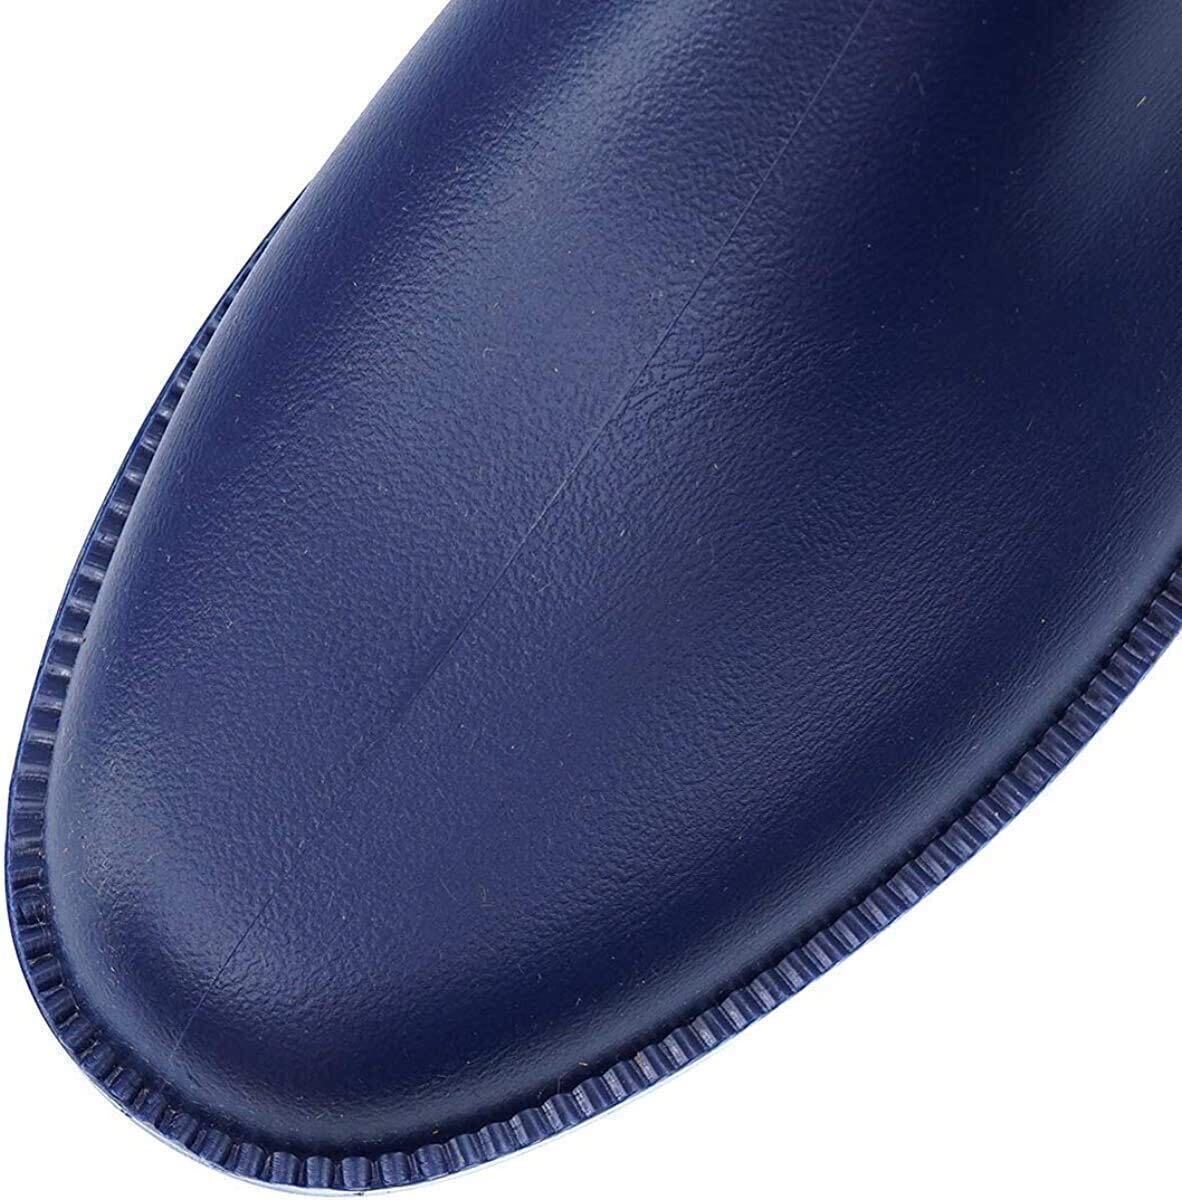 [Dafnada crucian | new goods ] rain boots lady's Winner FLEX LOGO 002|202036100| dark blue |37: approximately 23.5-24cm|DF000067